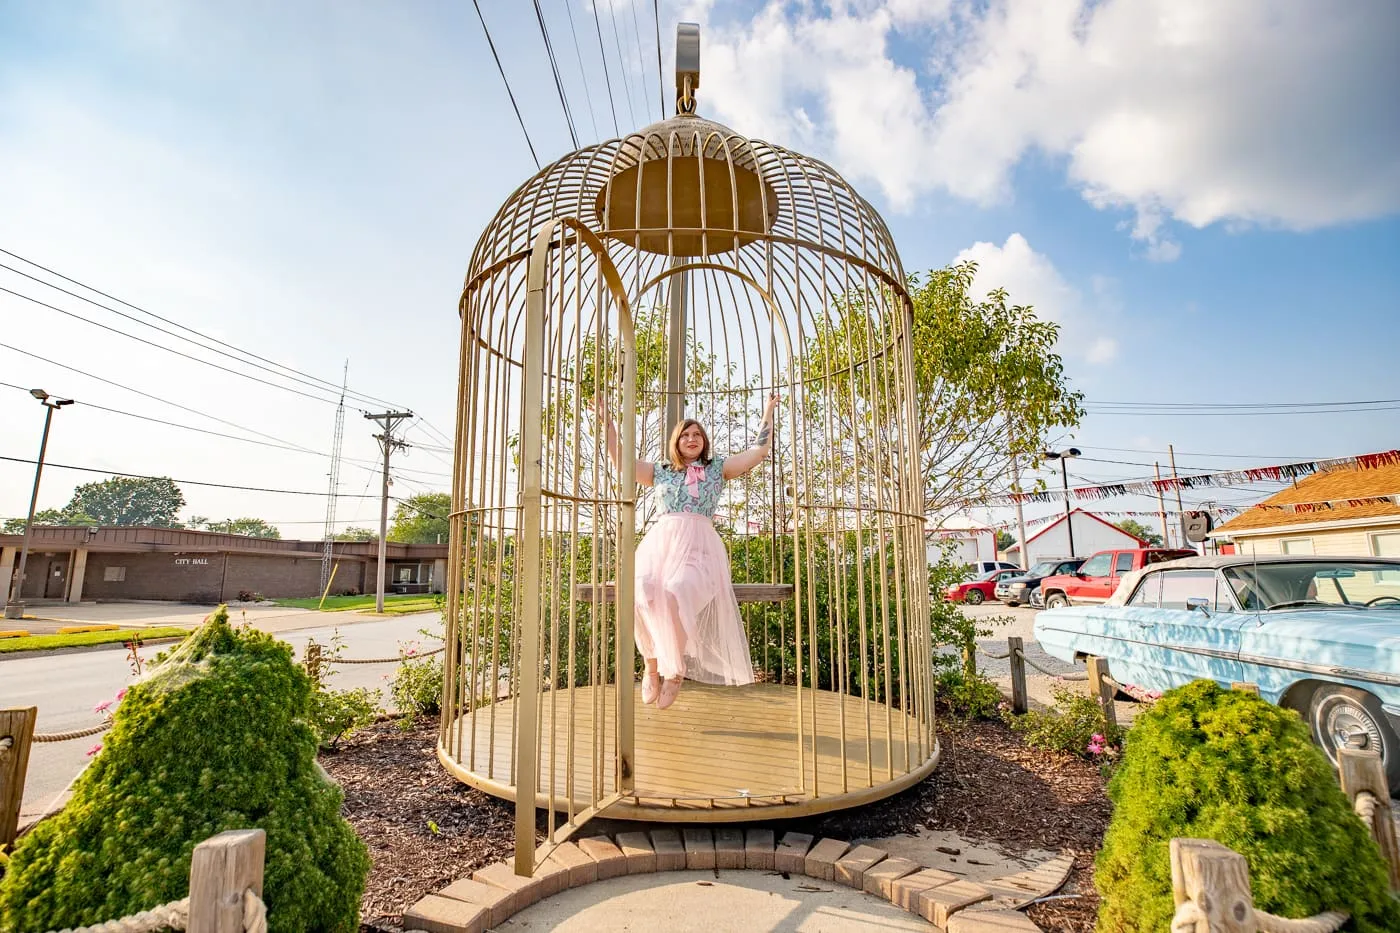 Big Birdcage in Casey, Illinois roadside attraction